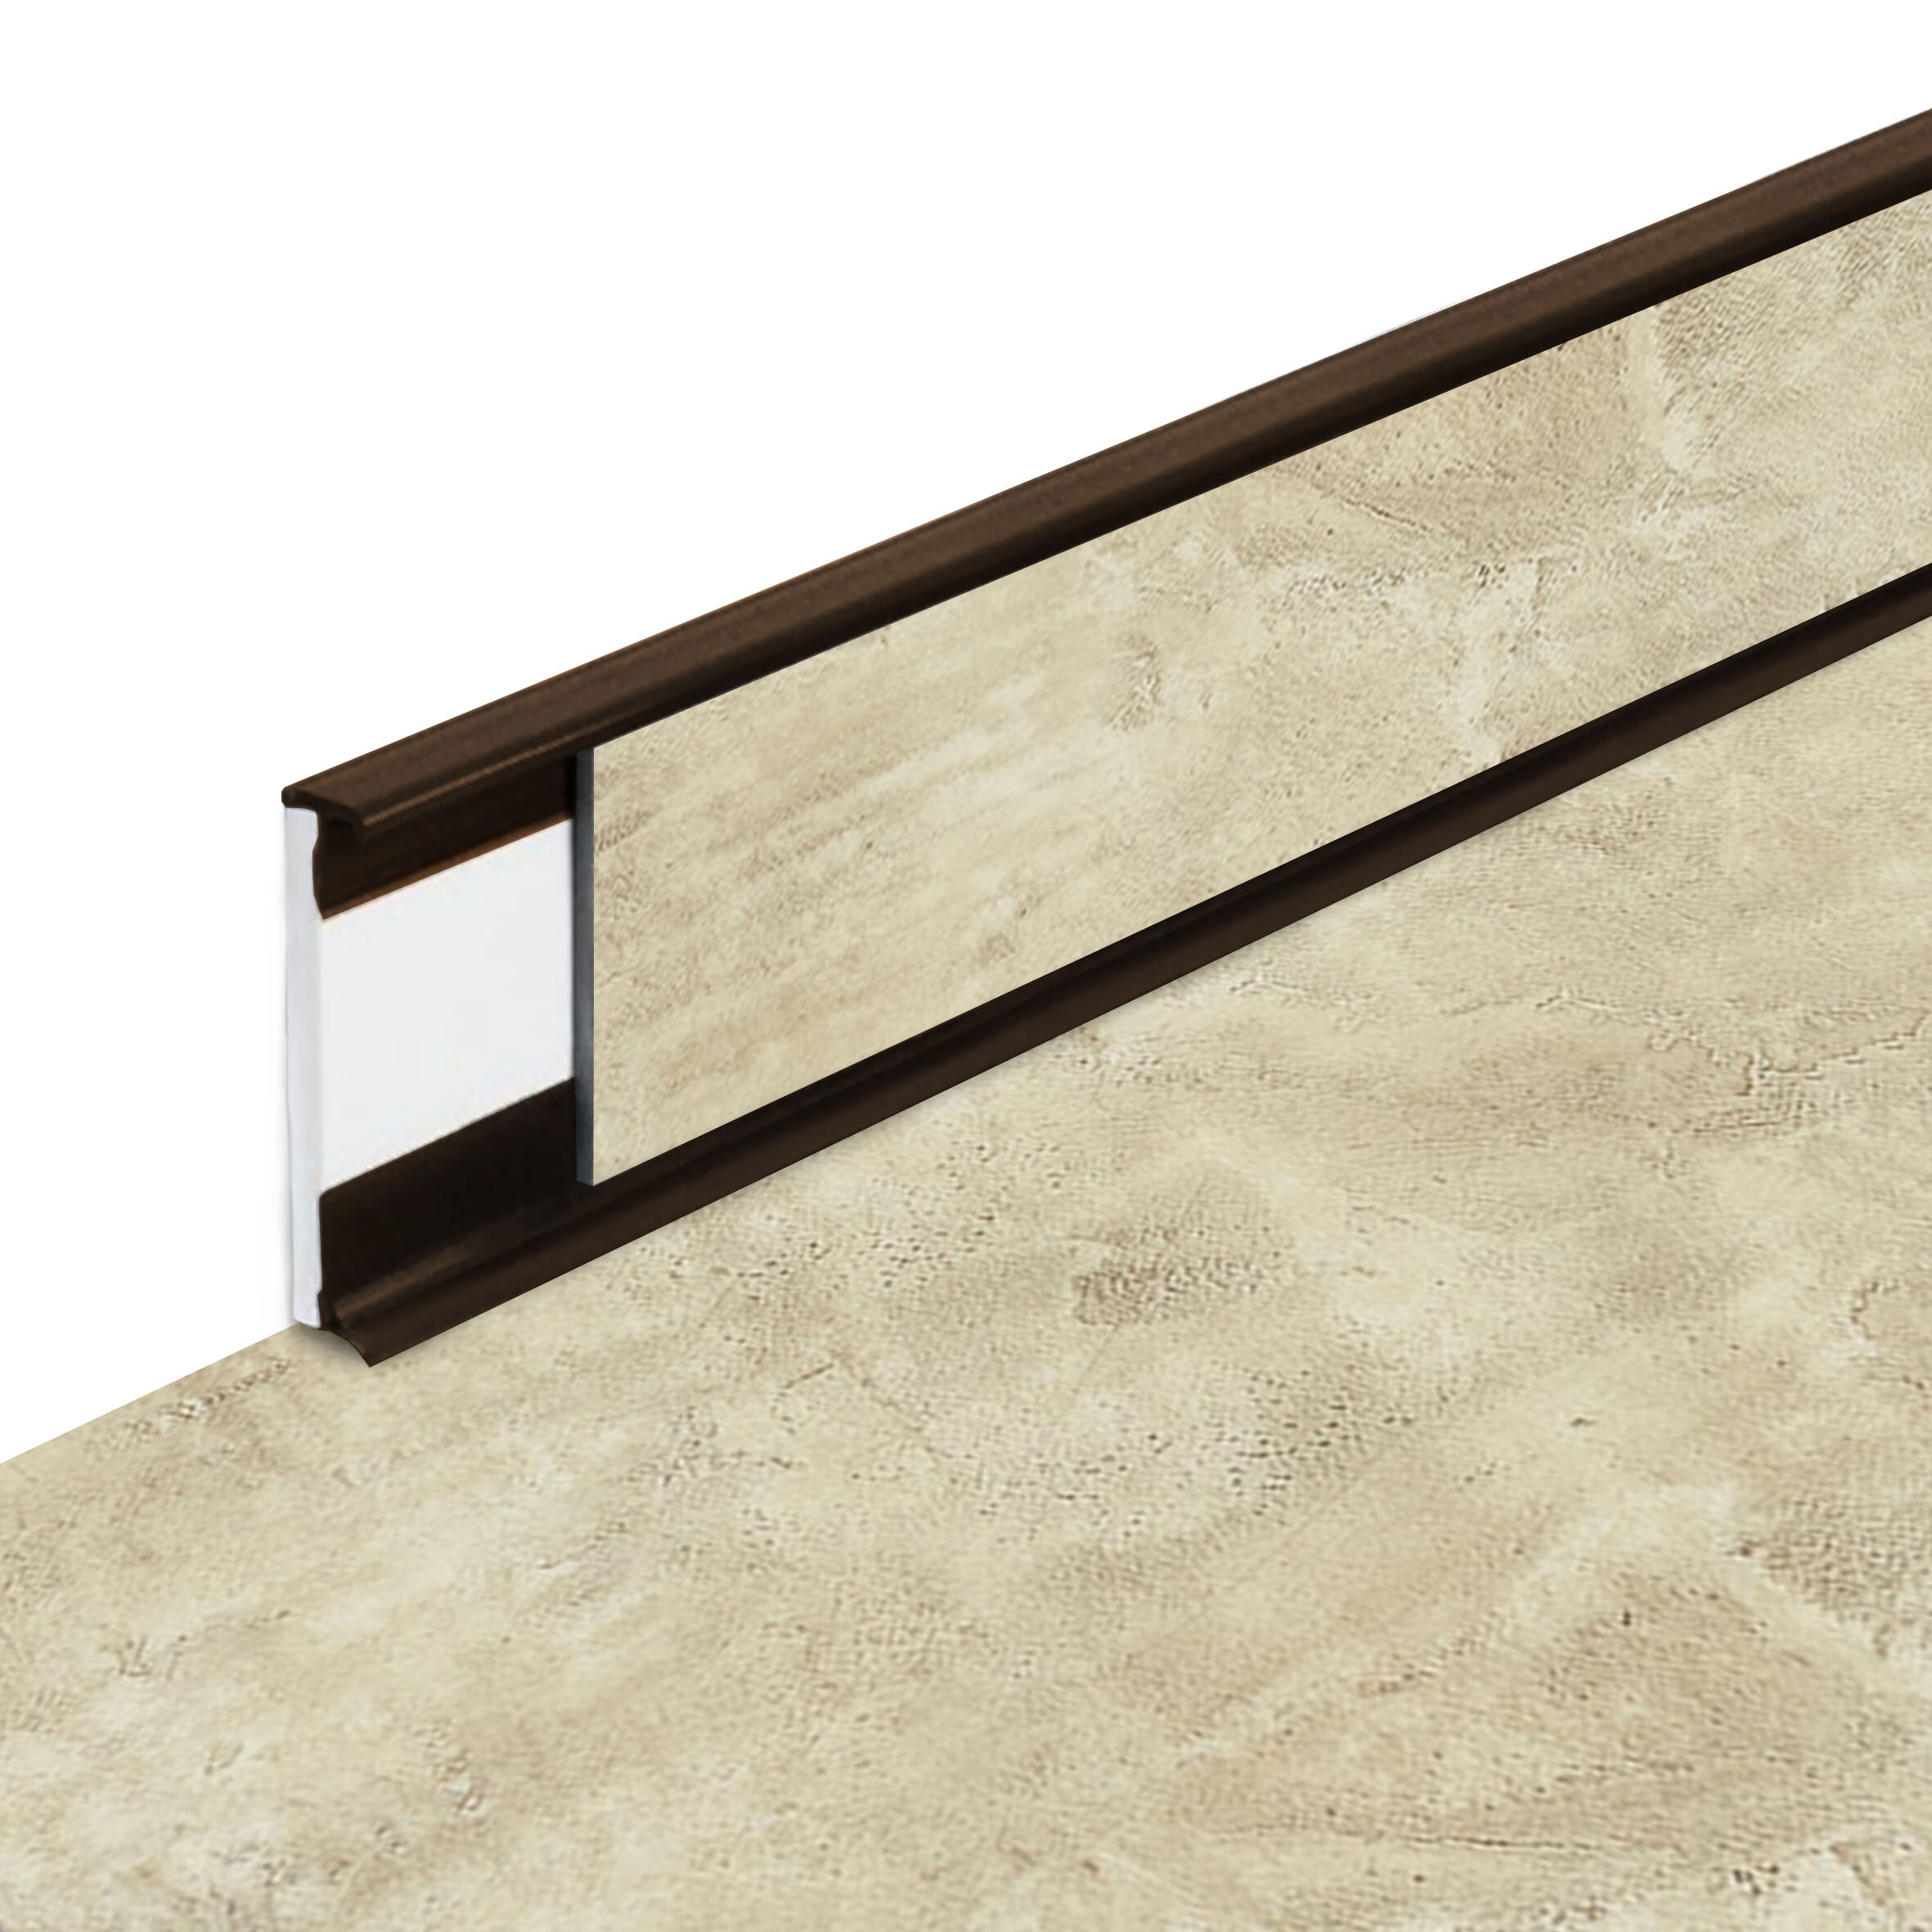 PVC vinylová soklová podlahová lišta Fortelock Business Forsen Sea Bay C016 Brown - dĺžka 200 cm, výška 5,8 cm, hrúbka 1,2 cm